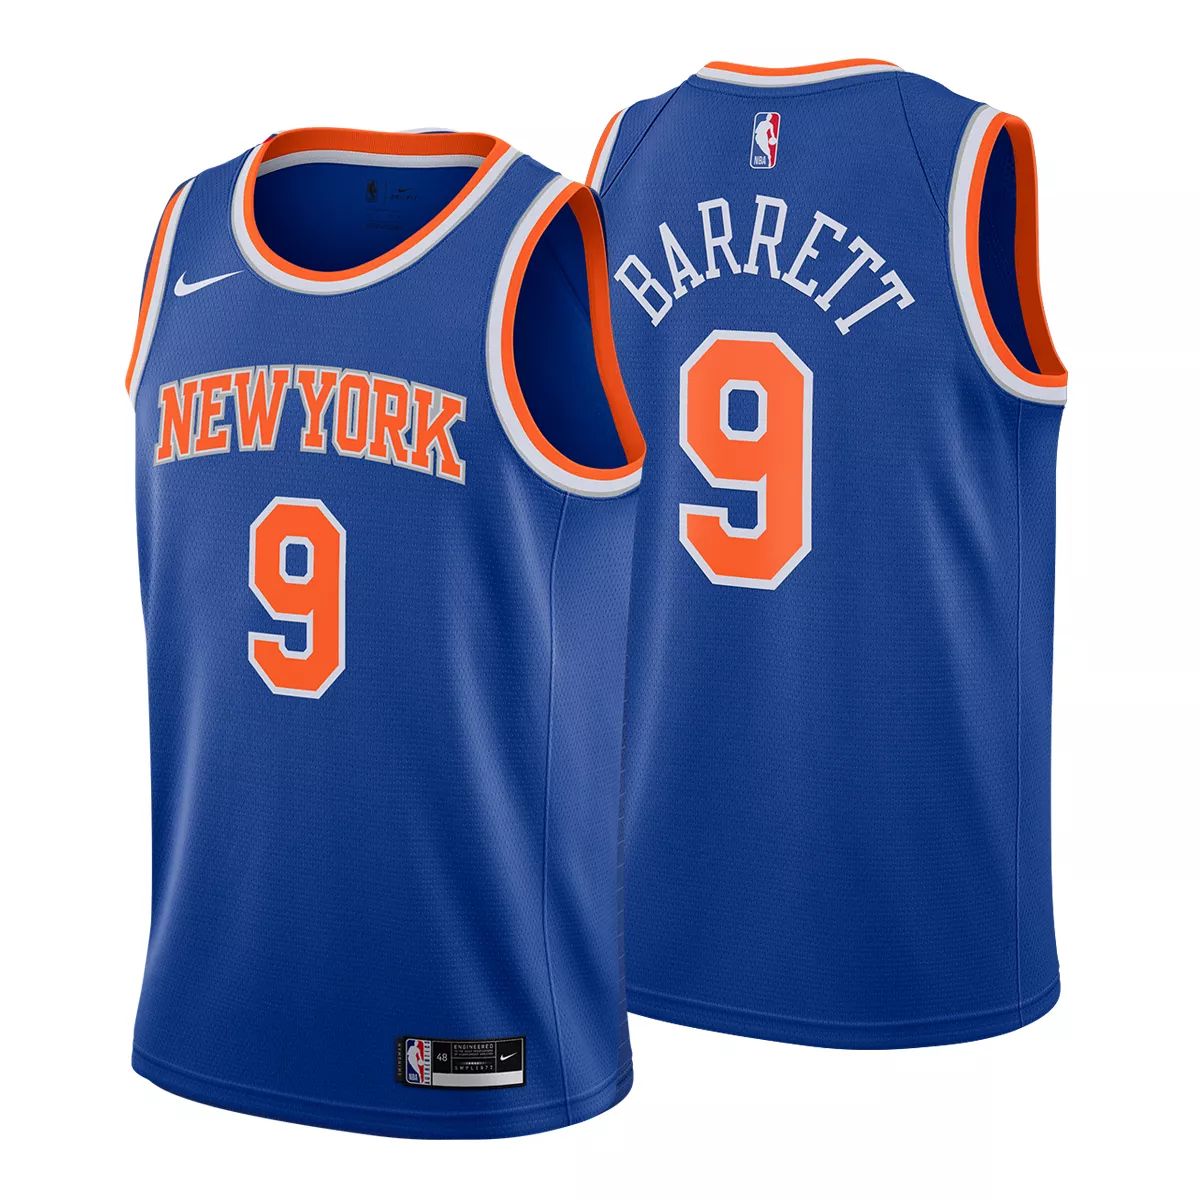 New York Knicks Nike Men's RJ Barrett Swingman Basketball Jersey